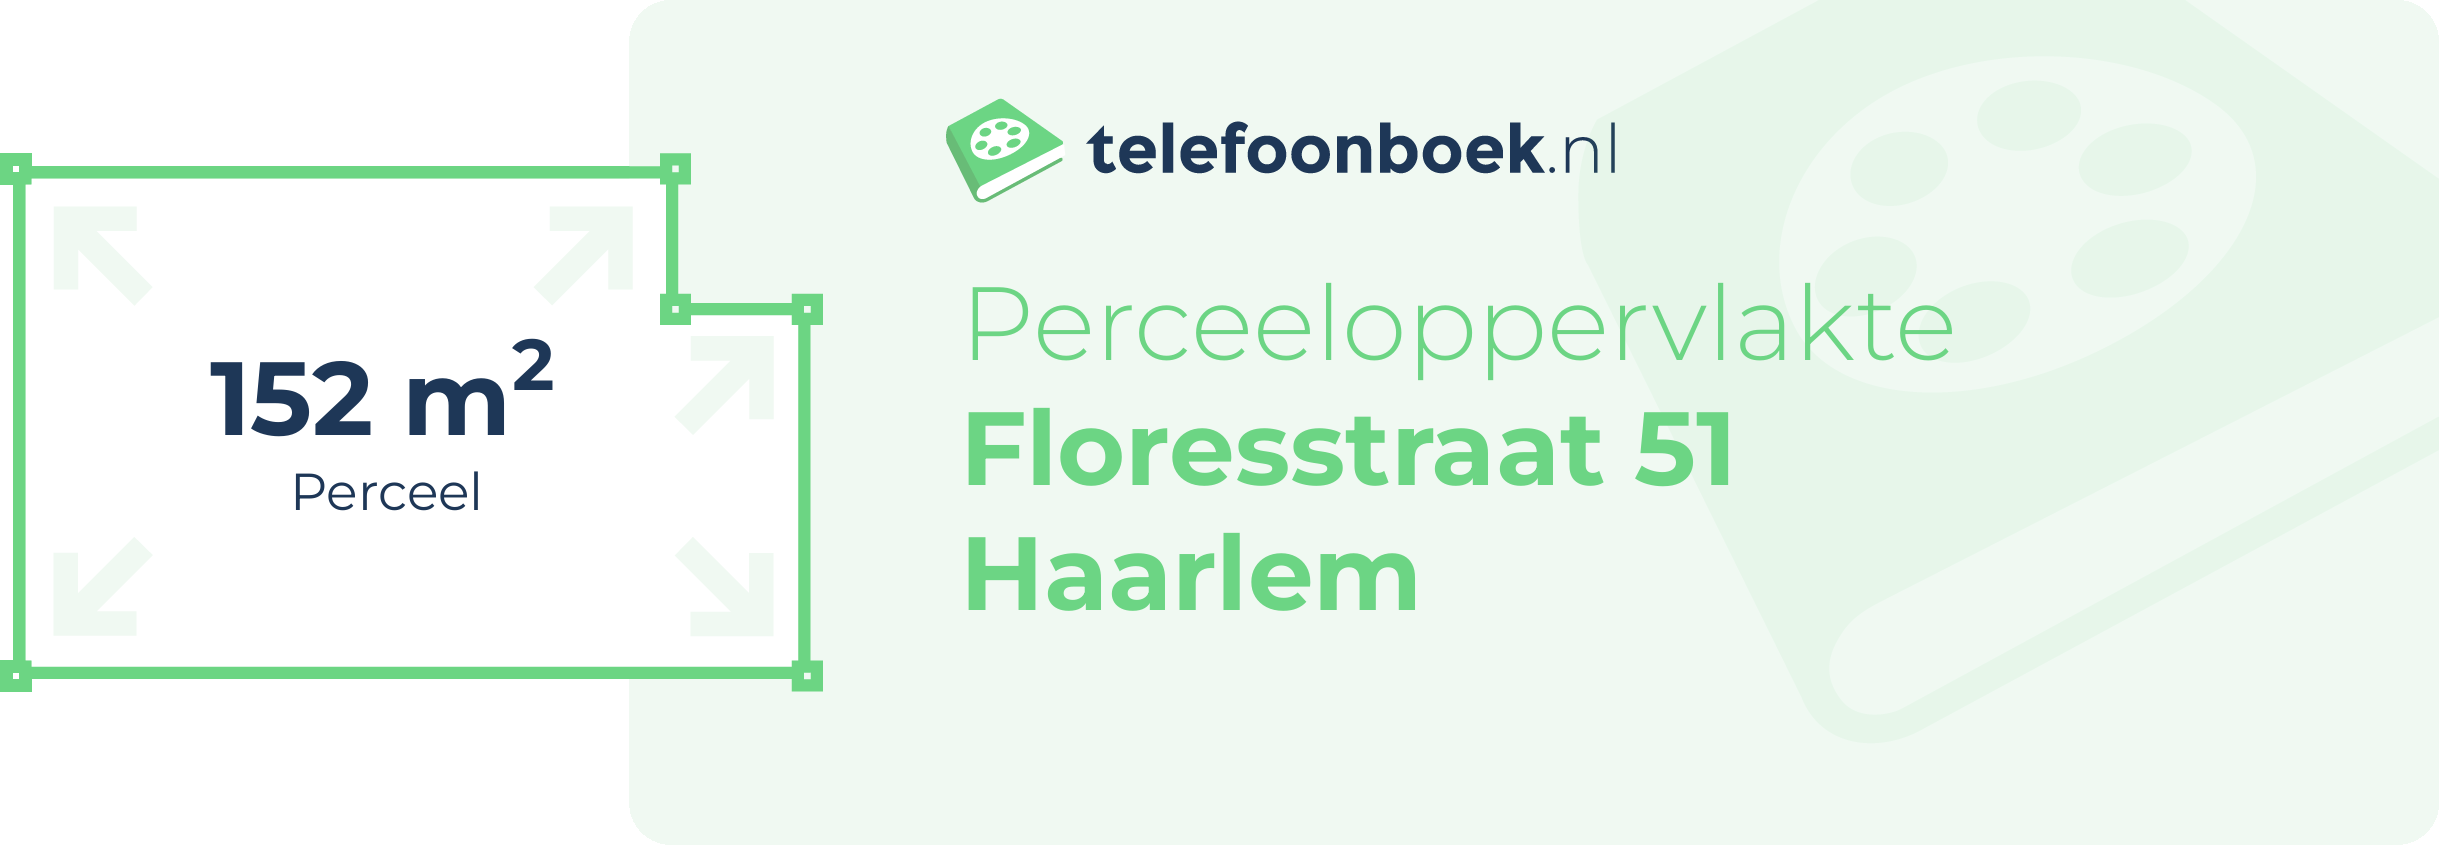 Perceeloppervlakte Floresstraat 51 Haarlem